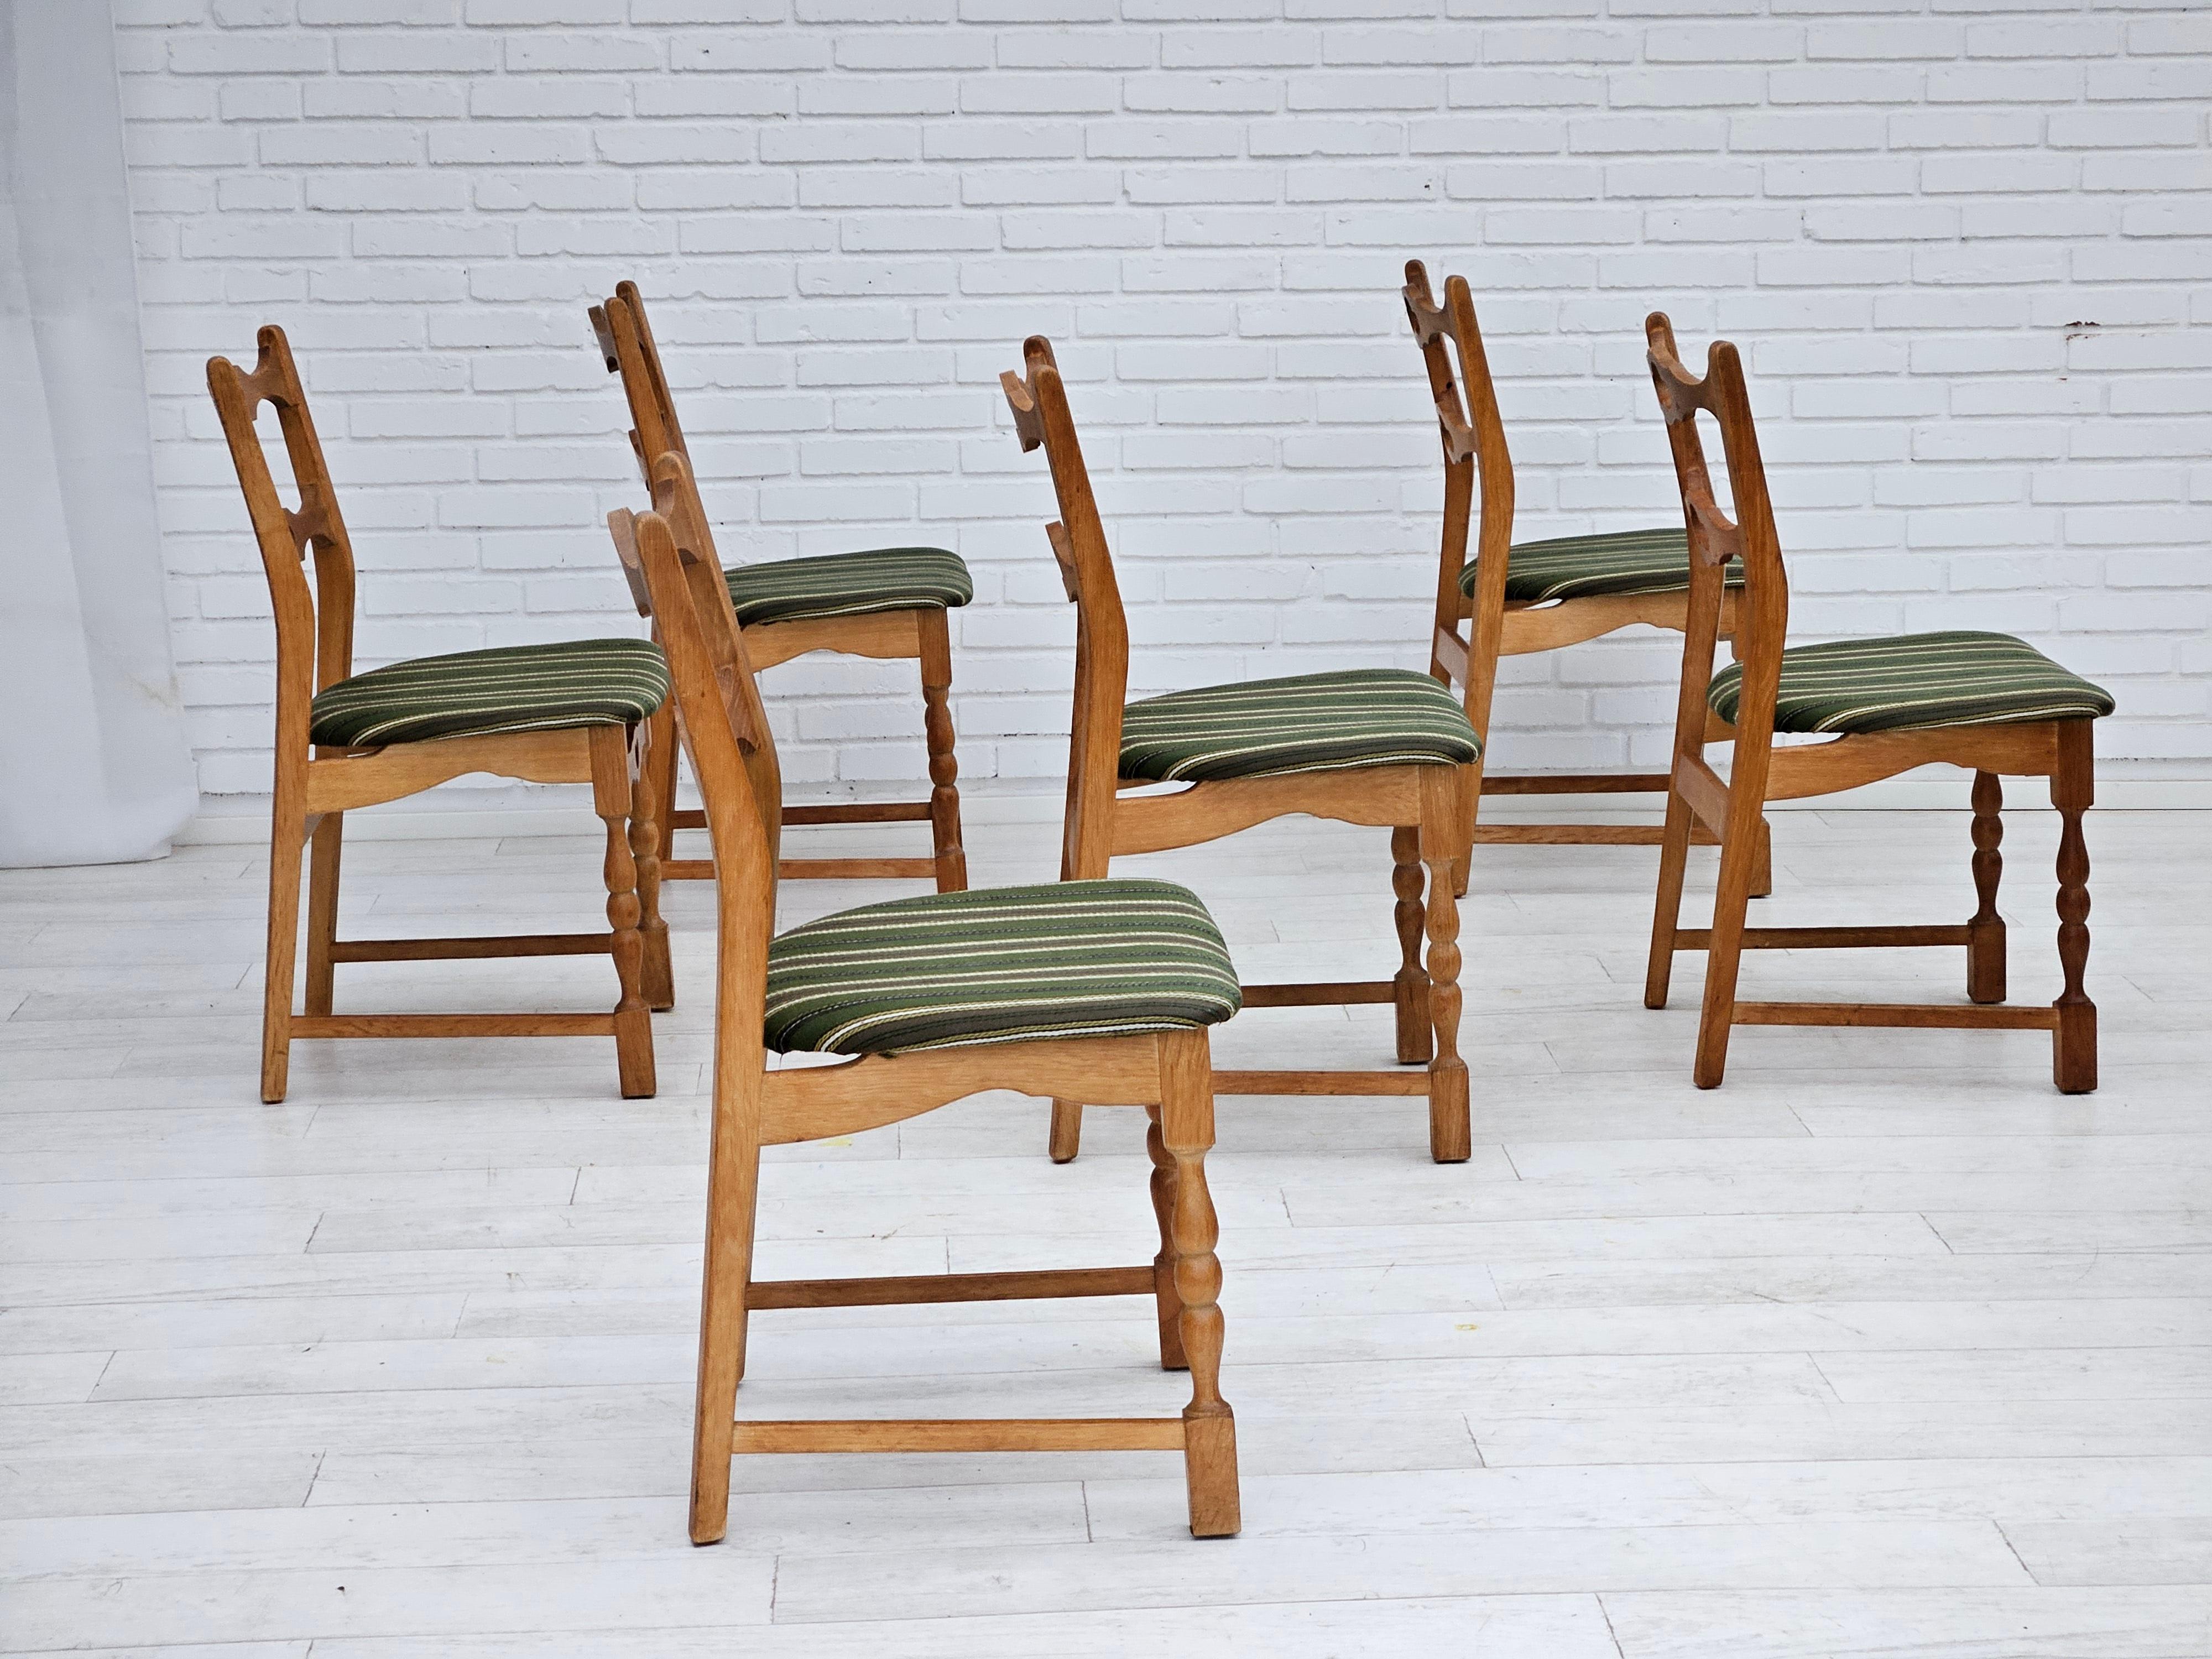 Scandinavian Modern 1970s, set of 6 Danish dinning chairs, original very good condition, oak wood.